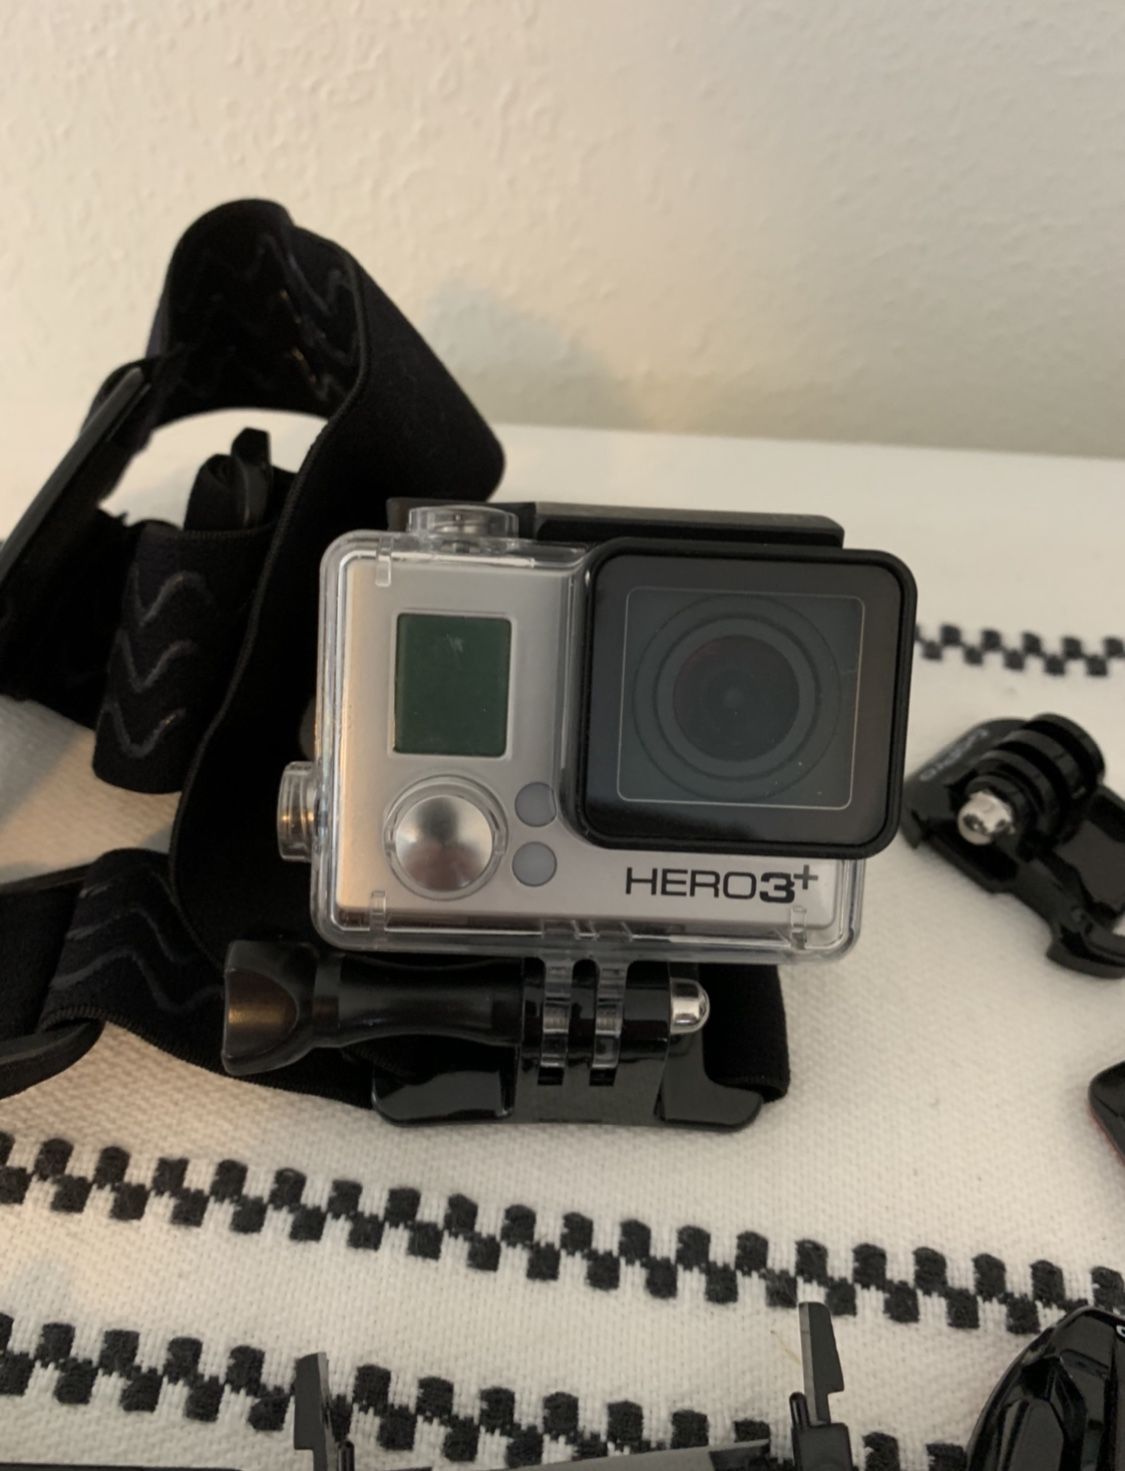 GoPro Hero 3+ Camera and Accessories